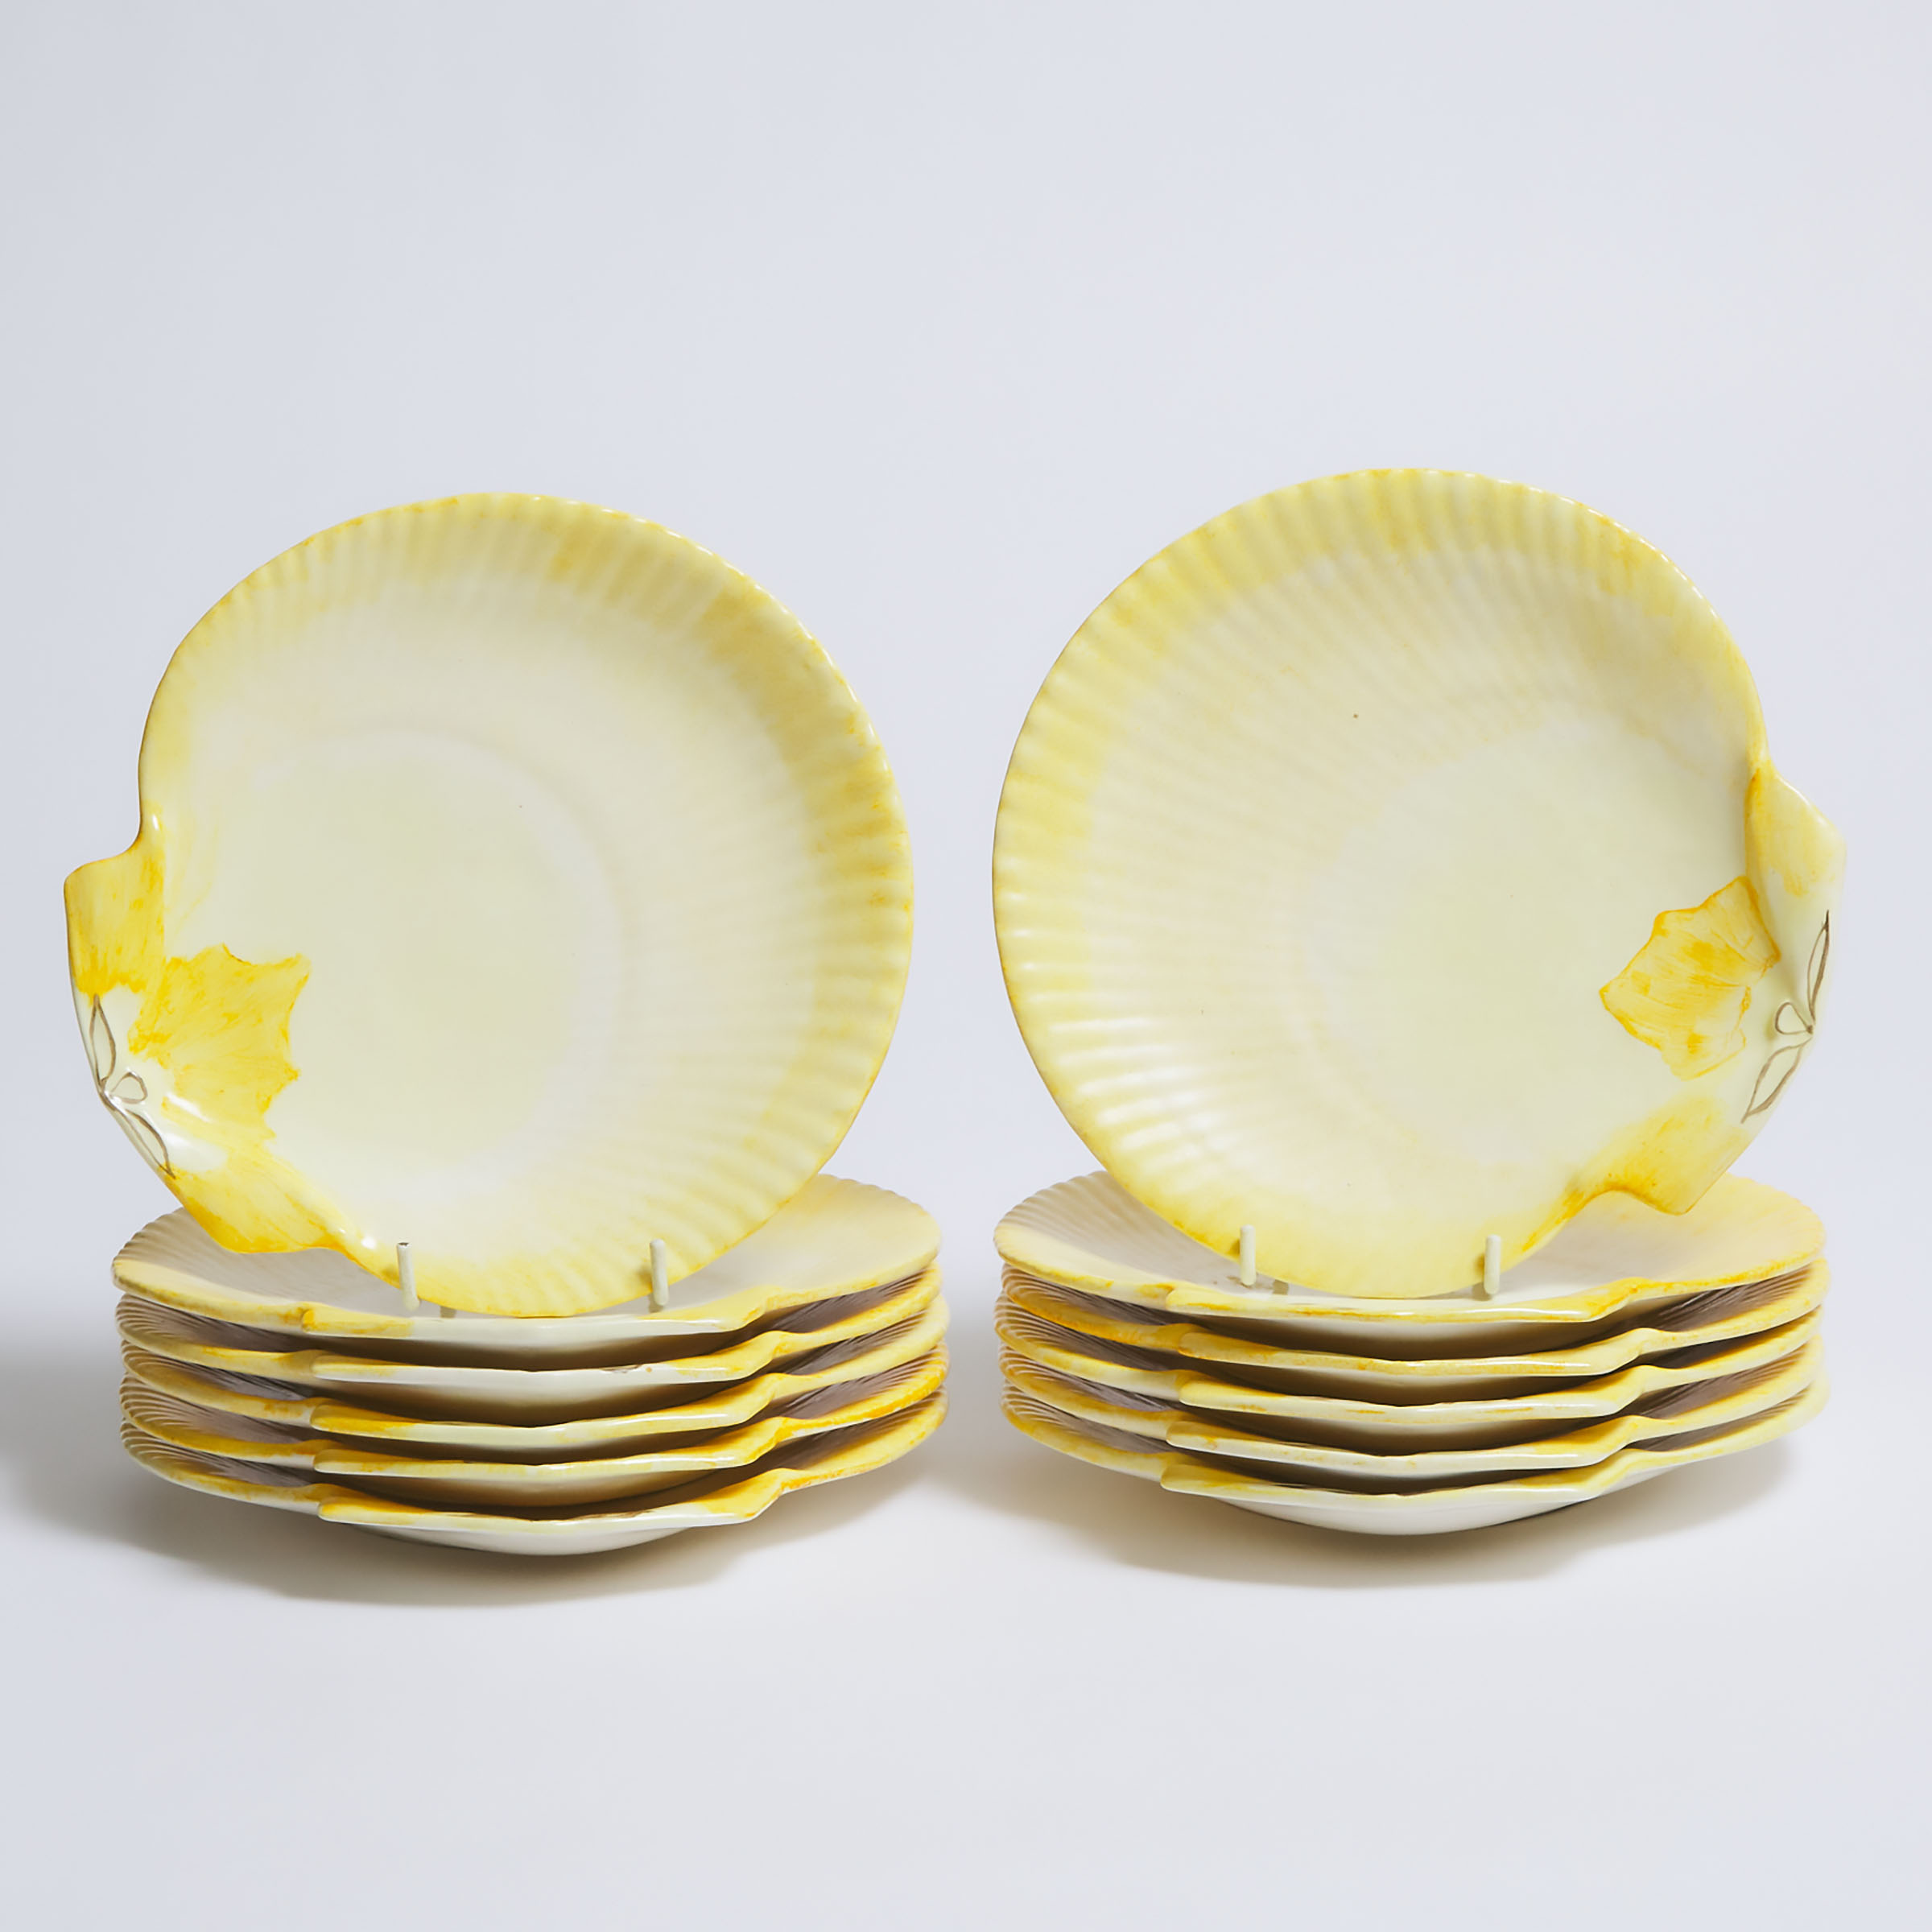 Dodie Thayer (American, 1926-2018), Twelve Sea Shell Plates, c.1970-80